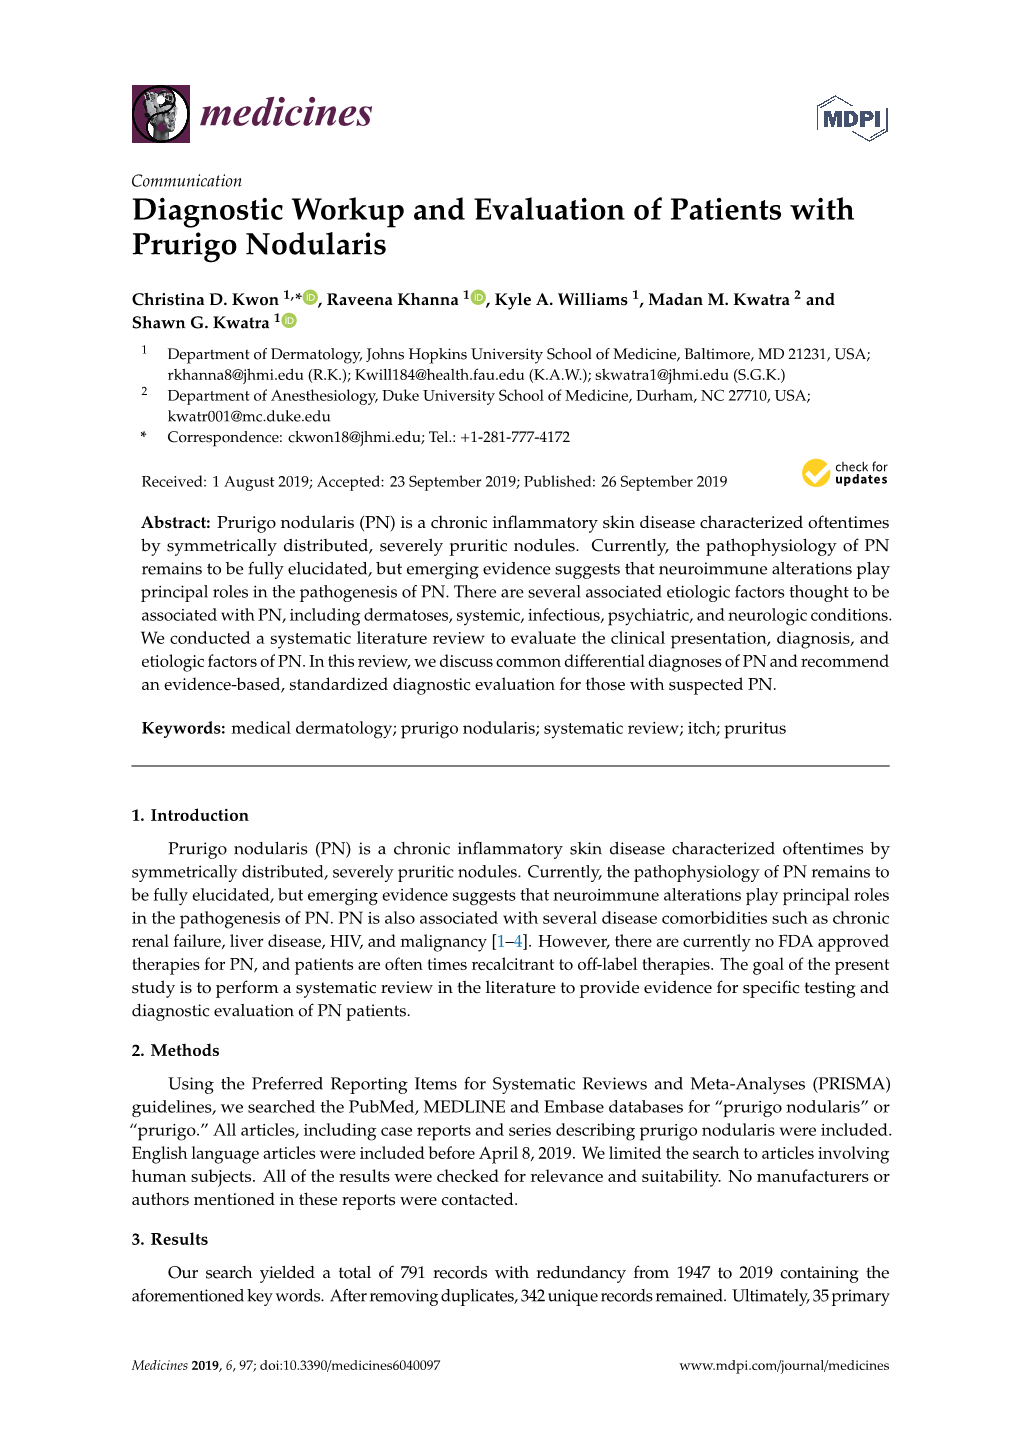 Diagnostic Workup and Evaluation of Patients with Prurigo Nodularis